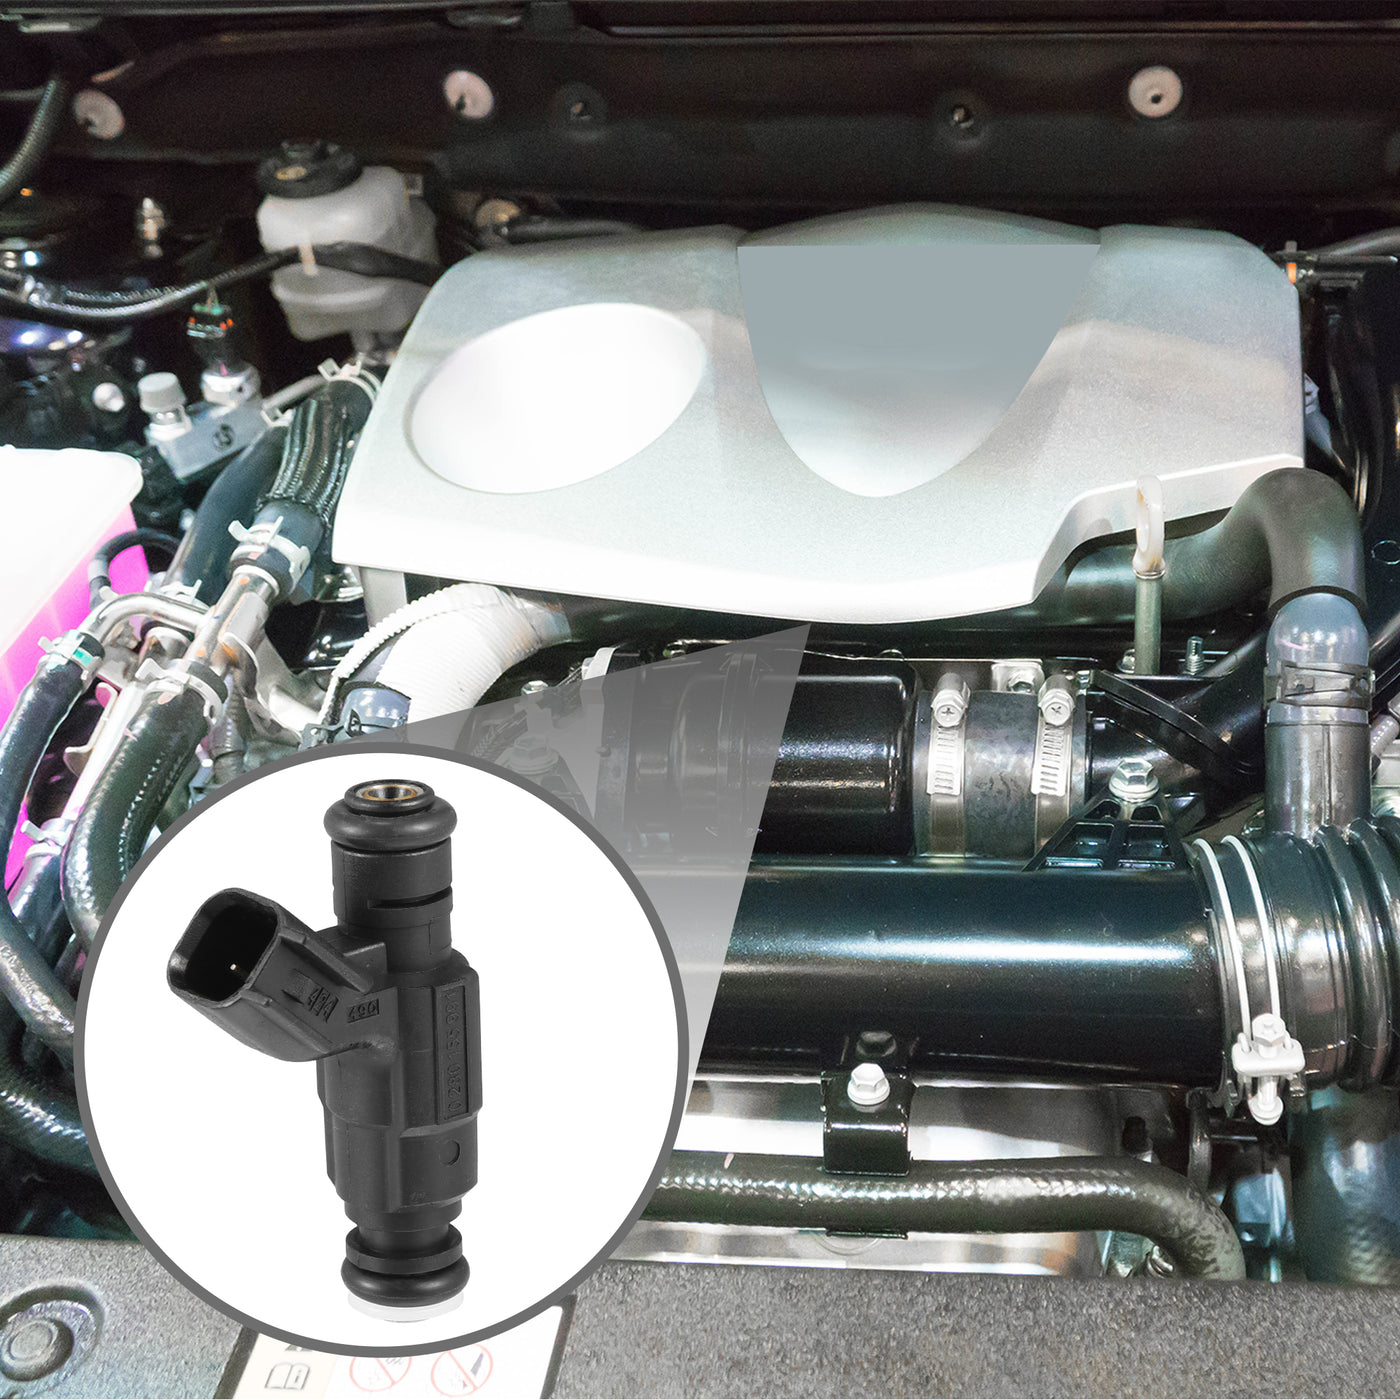 Partuto Fuel Injector - Car Inner Engnie Fuel Injectors - for Mini One Cooper 2000-2008 Metal Black - 4 Pcs